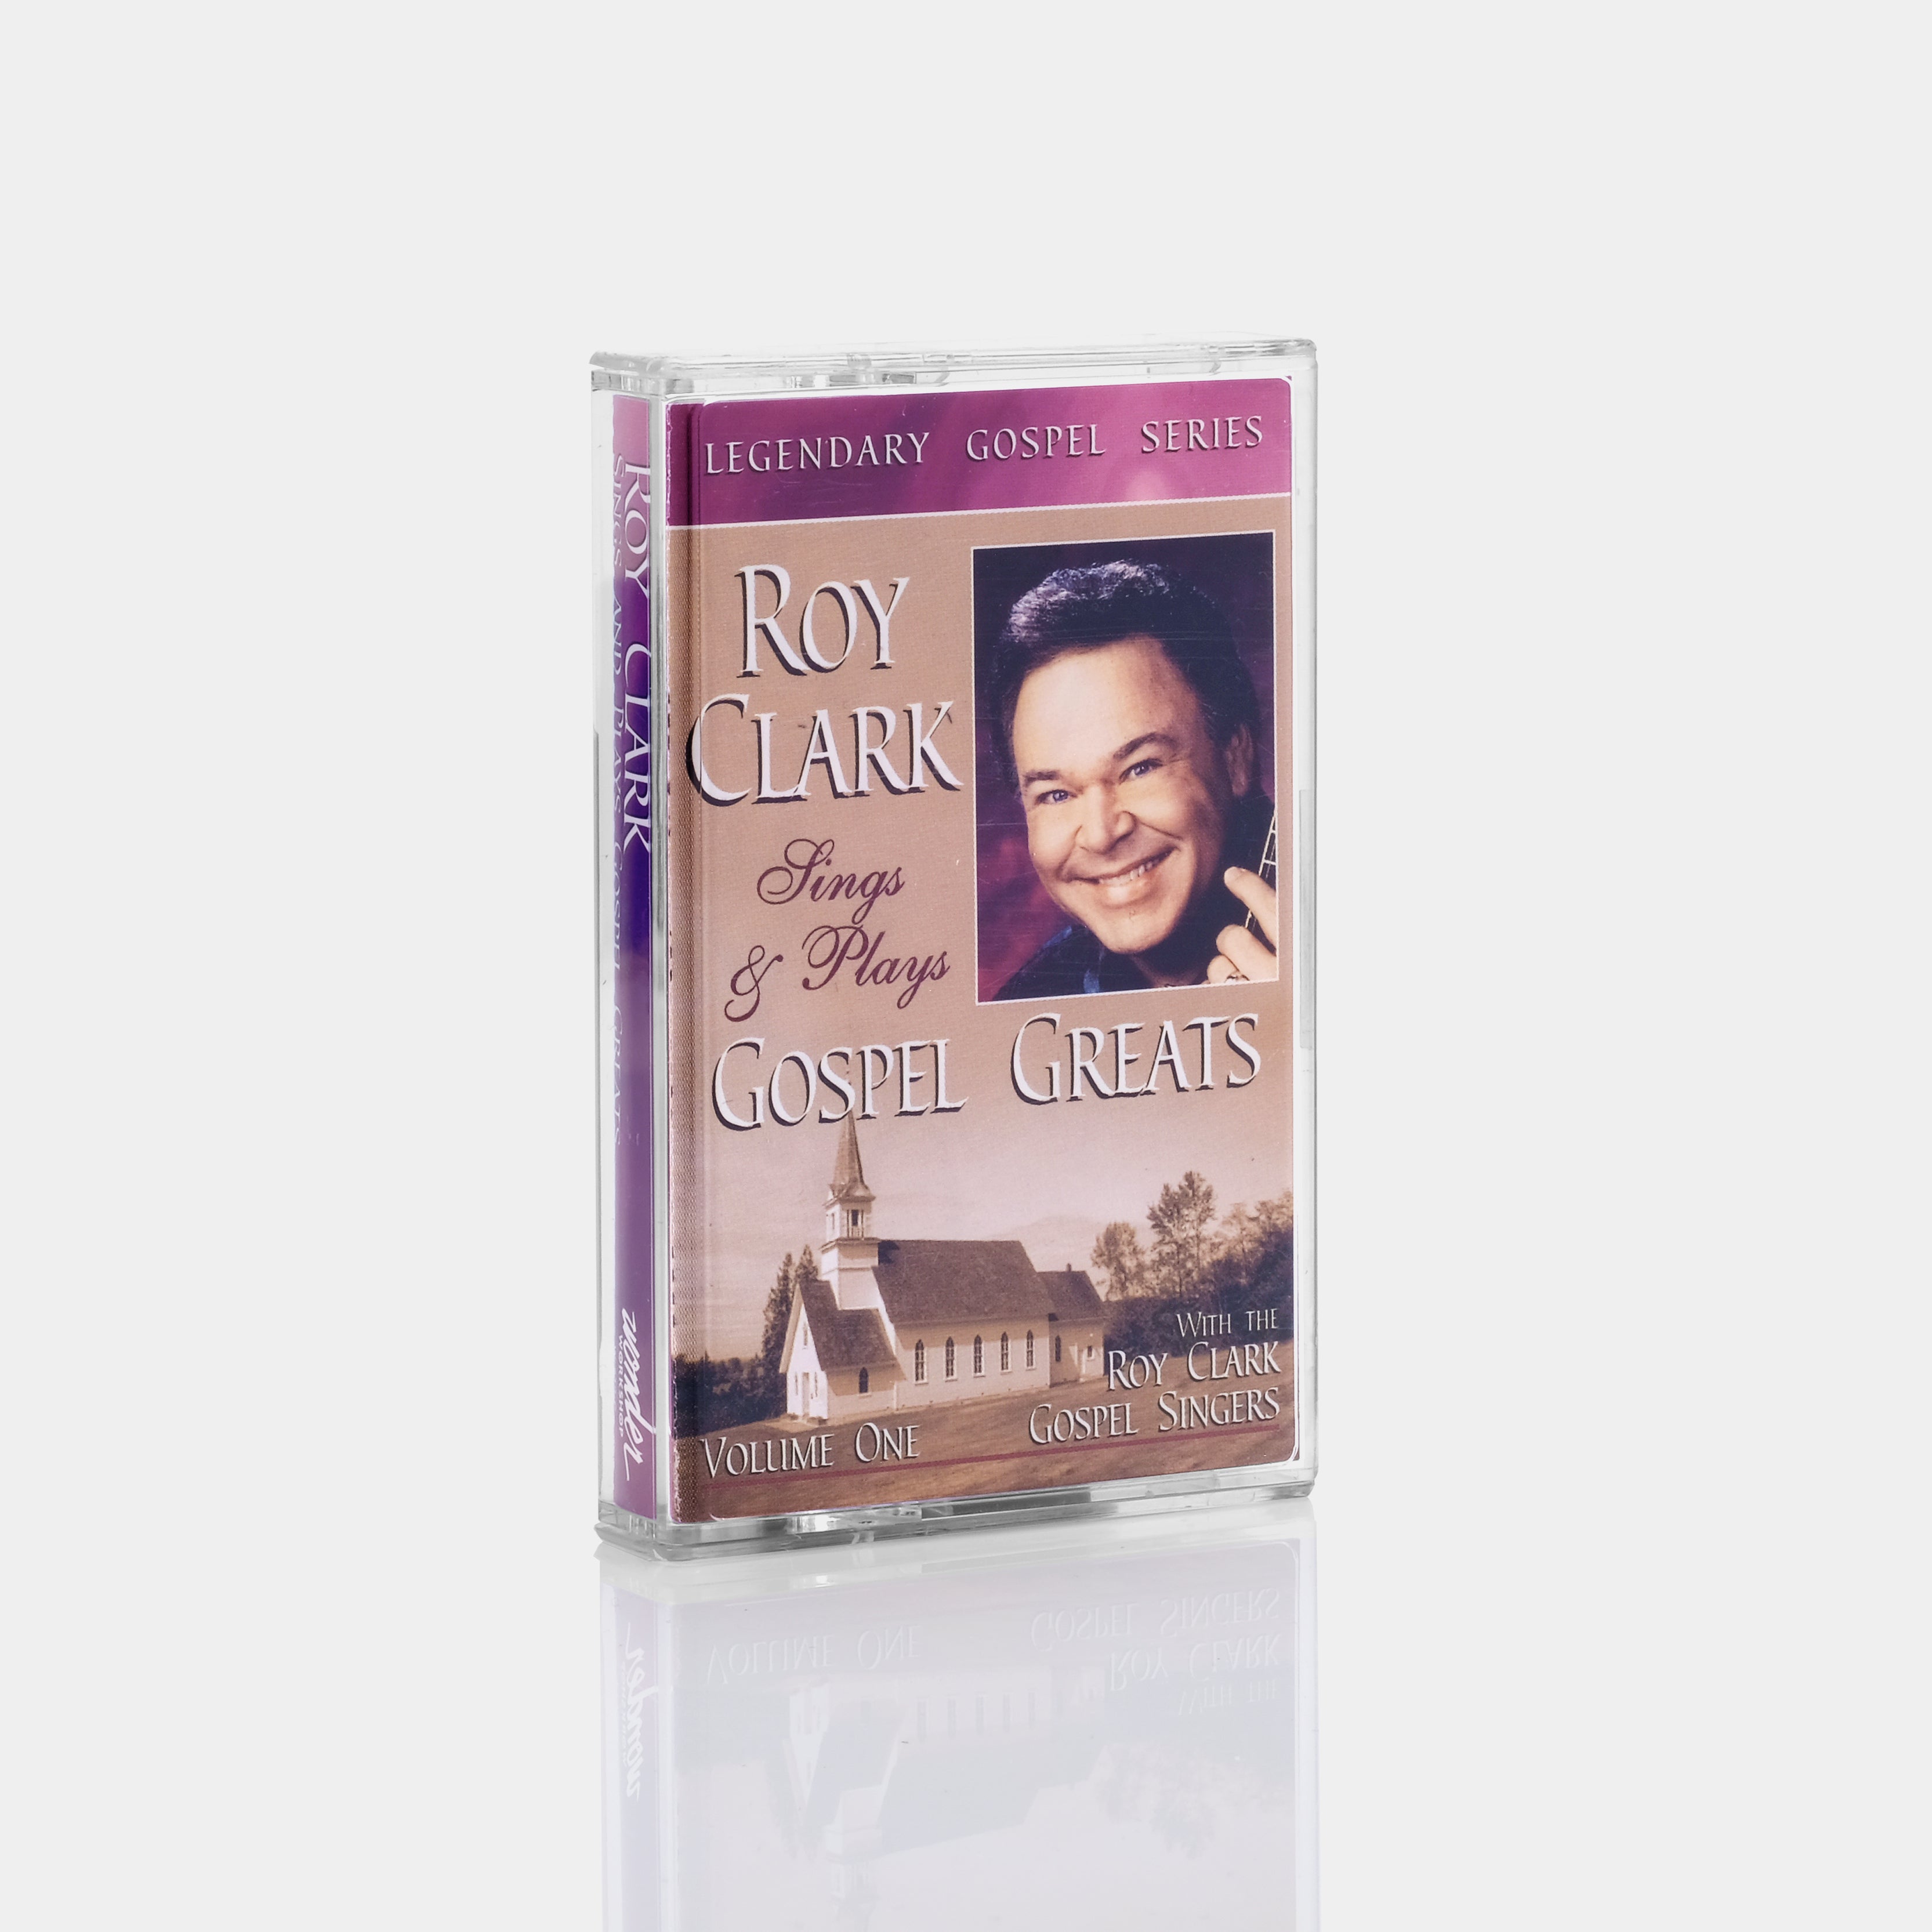 Roy Clark - Sings & Plays Gospel Greats (Volume One) Cassette Tape